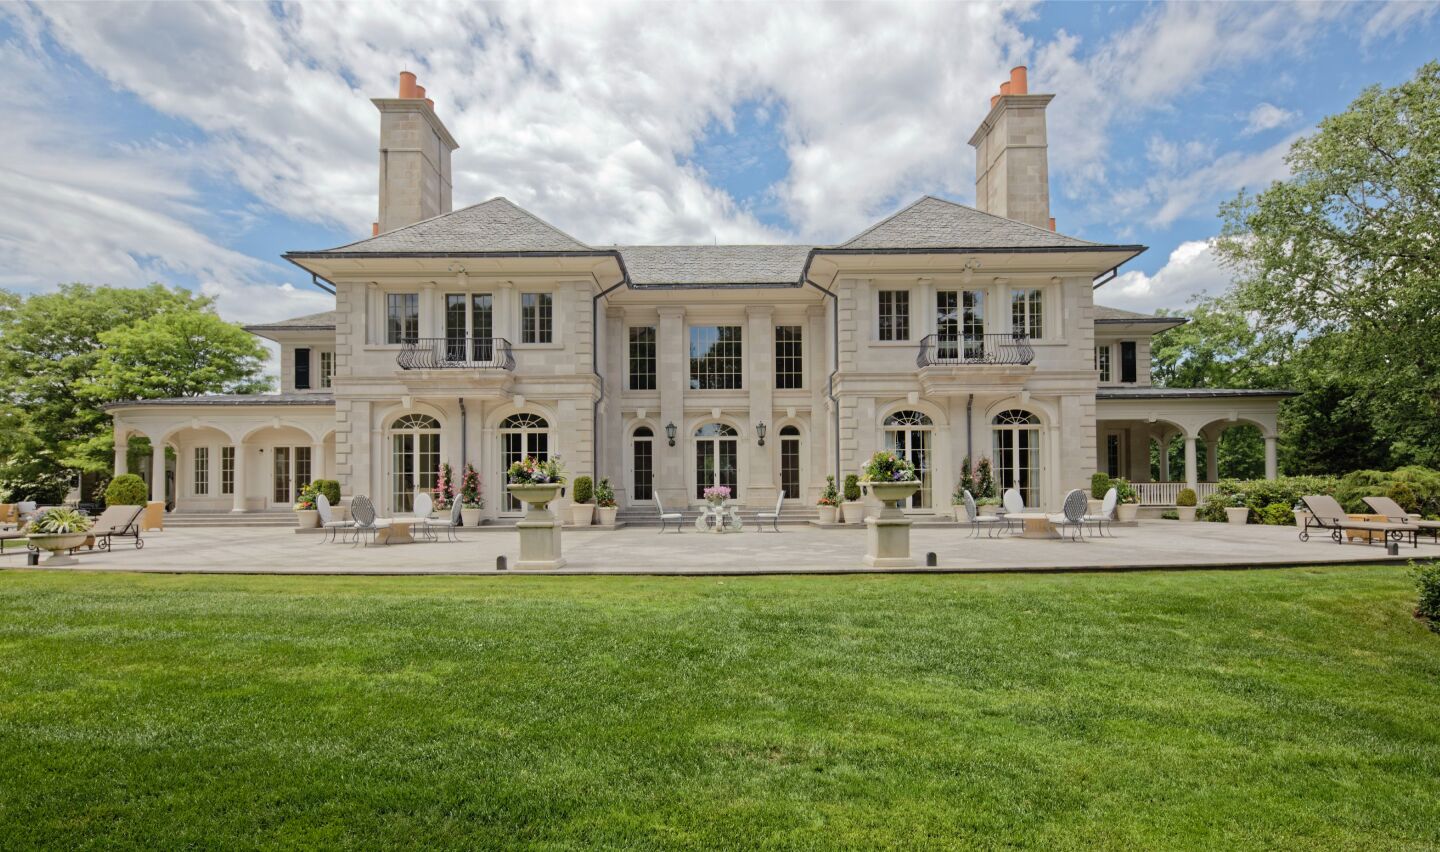 Paul Fireman's Massachusetts mansion: the exterior